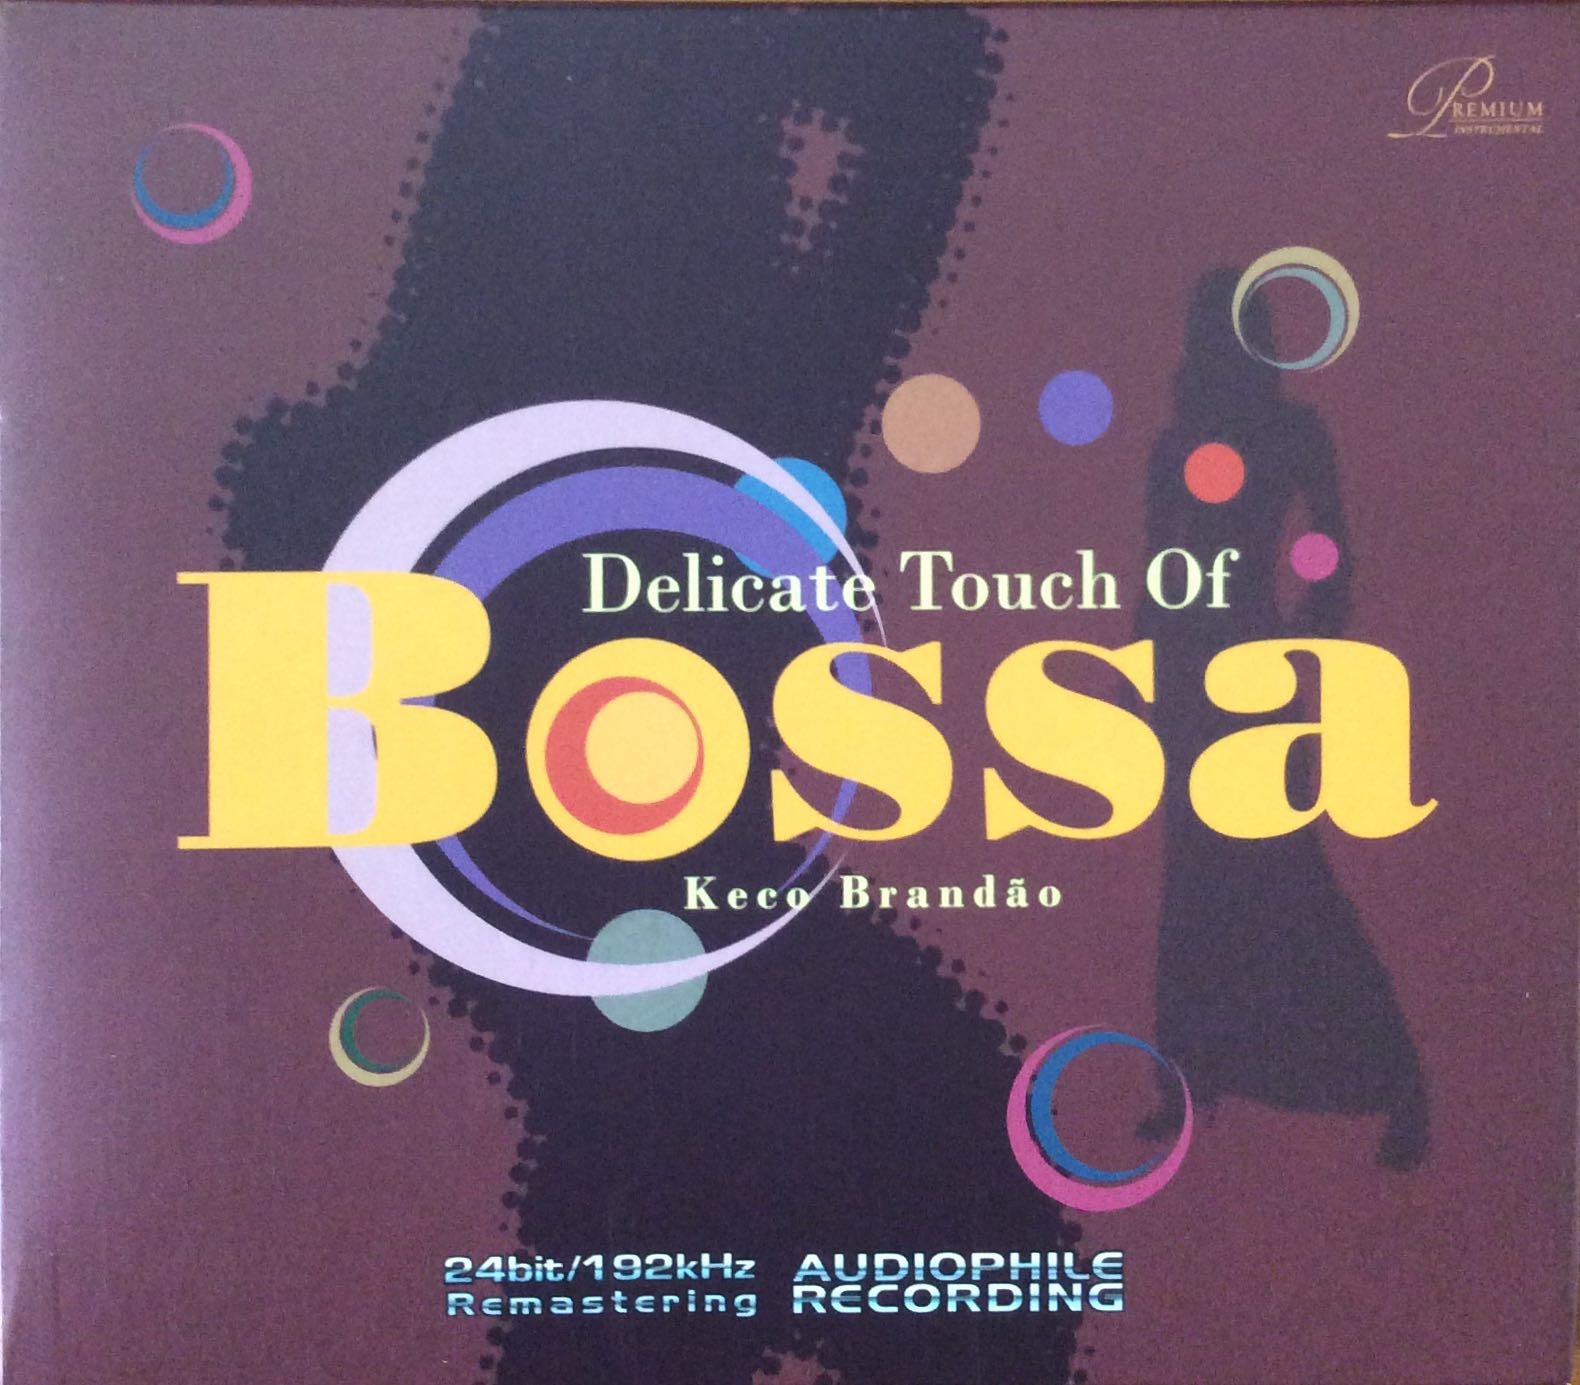 Keco Brandao - DELICATE TOUCH OF BOSSA 24bit 192kHz Remastering Audiophile CD